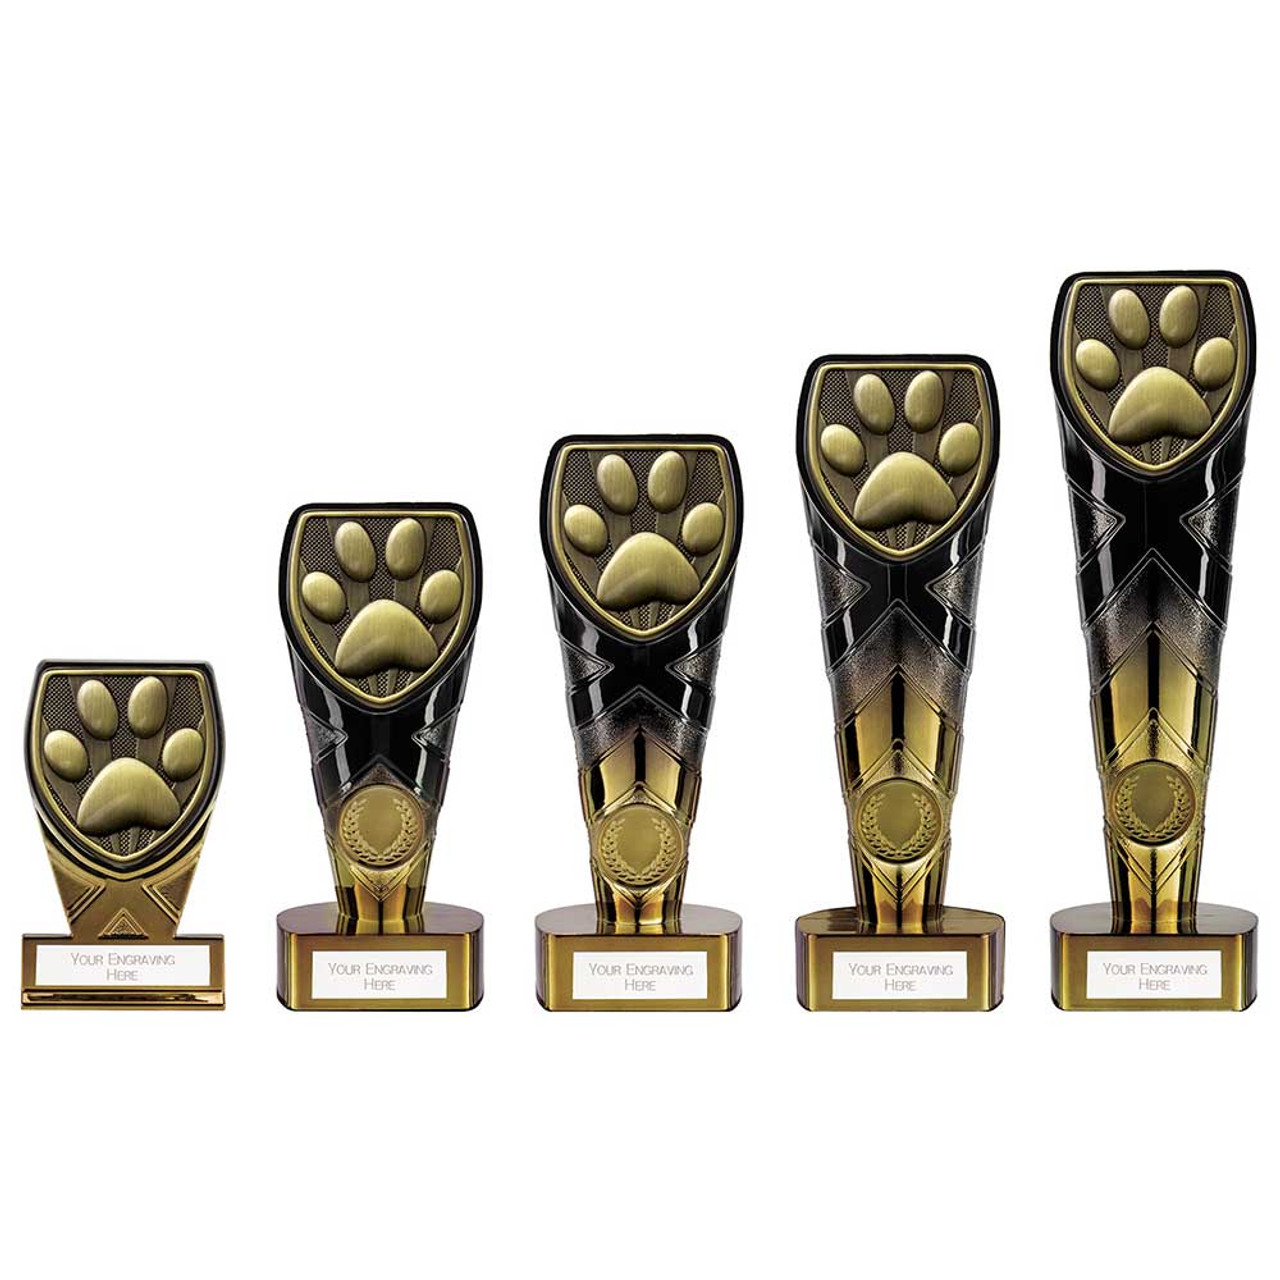 Dog Show Award Black & Gold Fusion Cobra Trophy in 5 Sizes